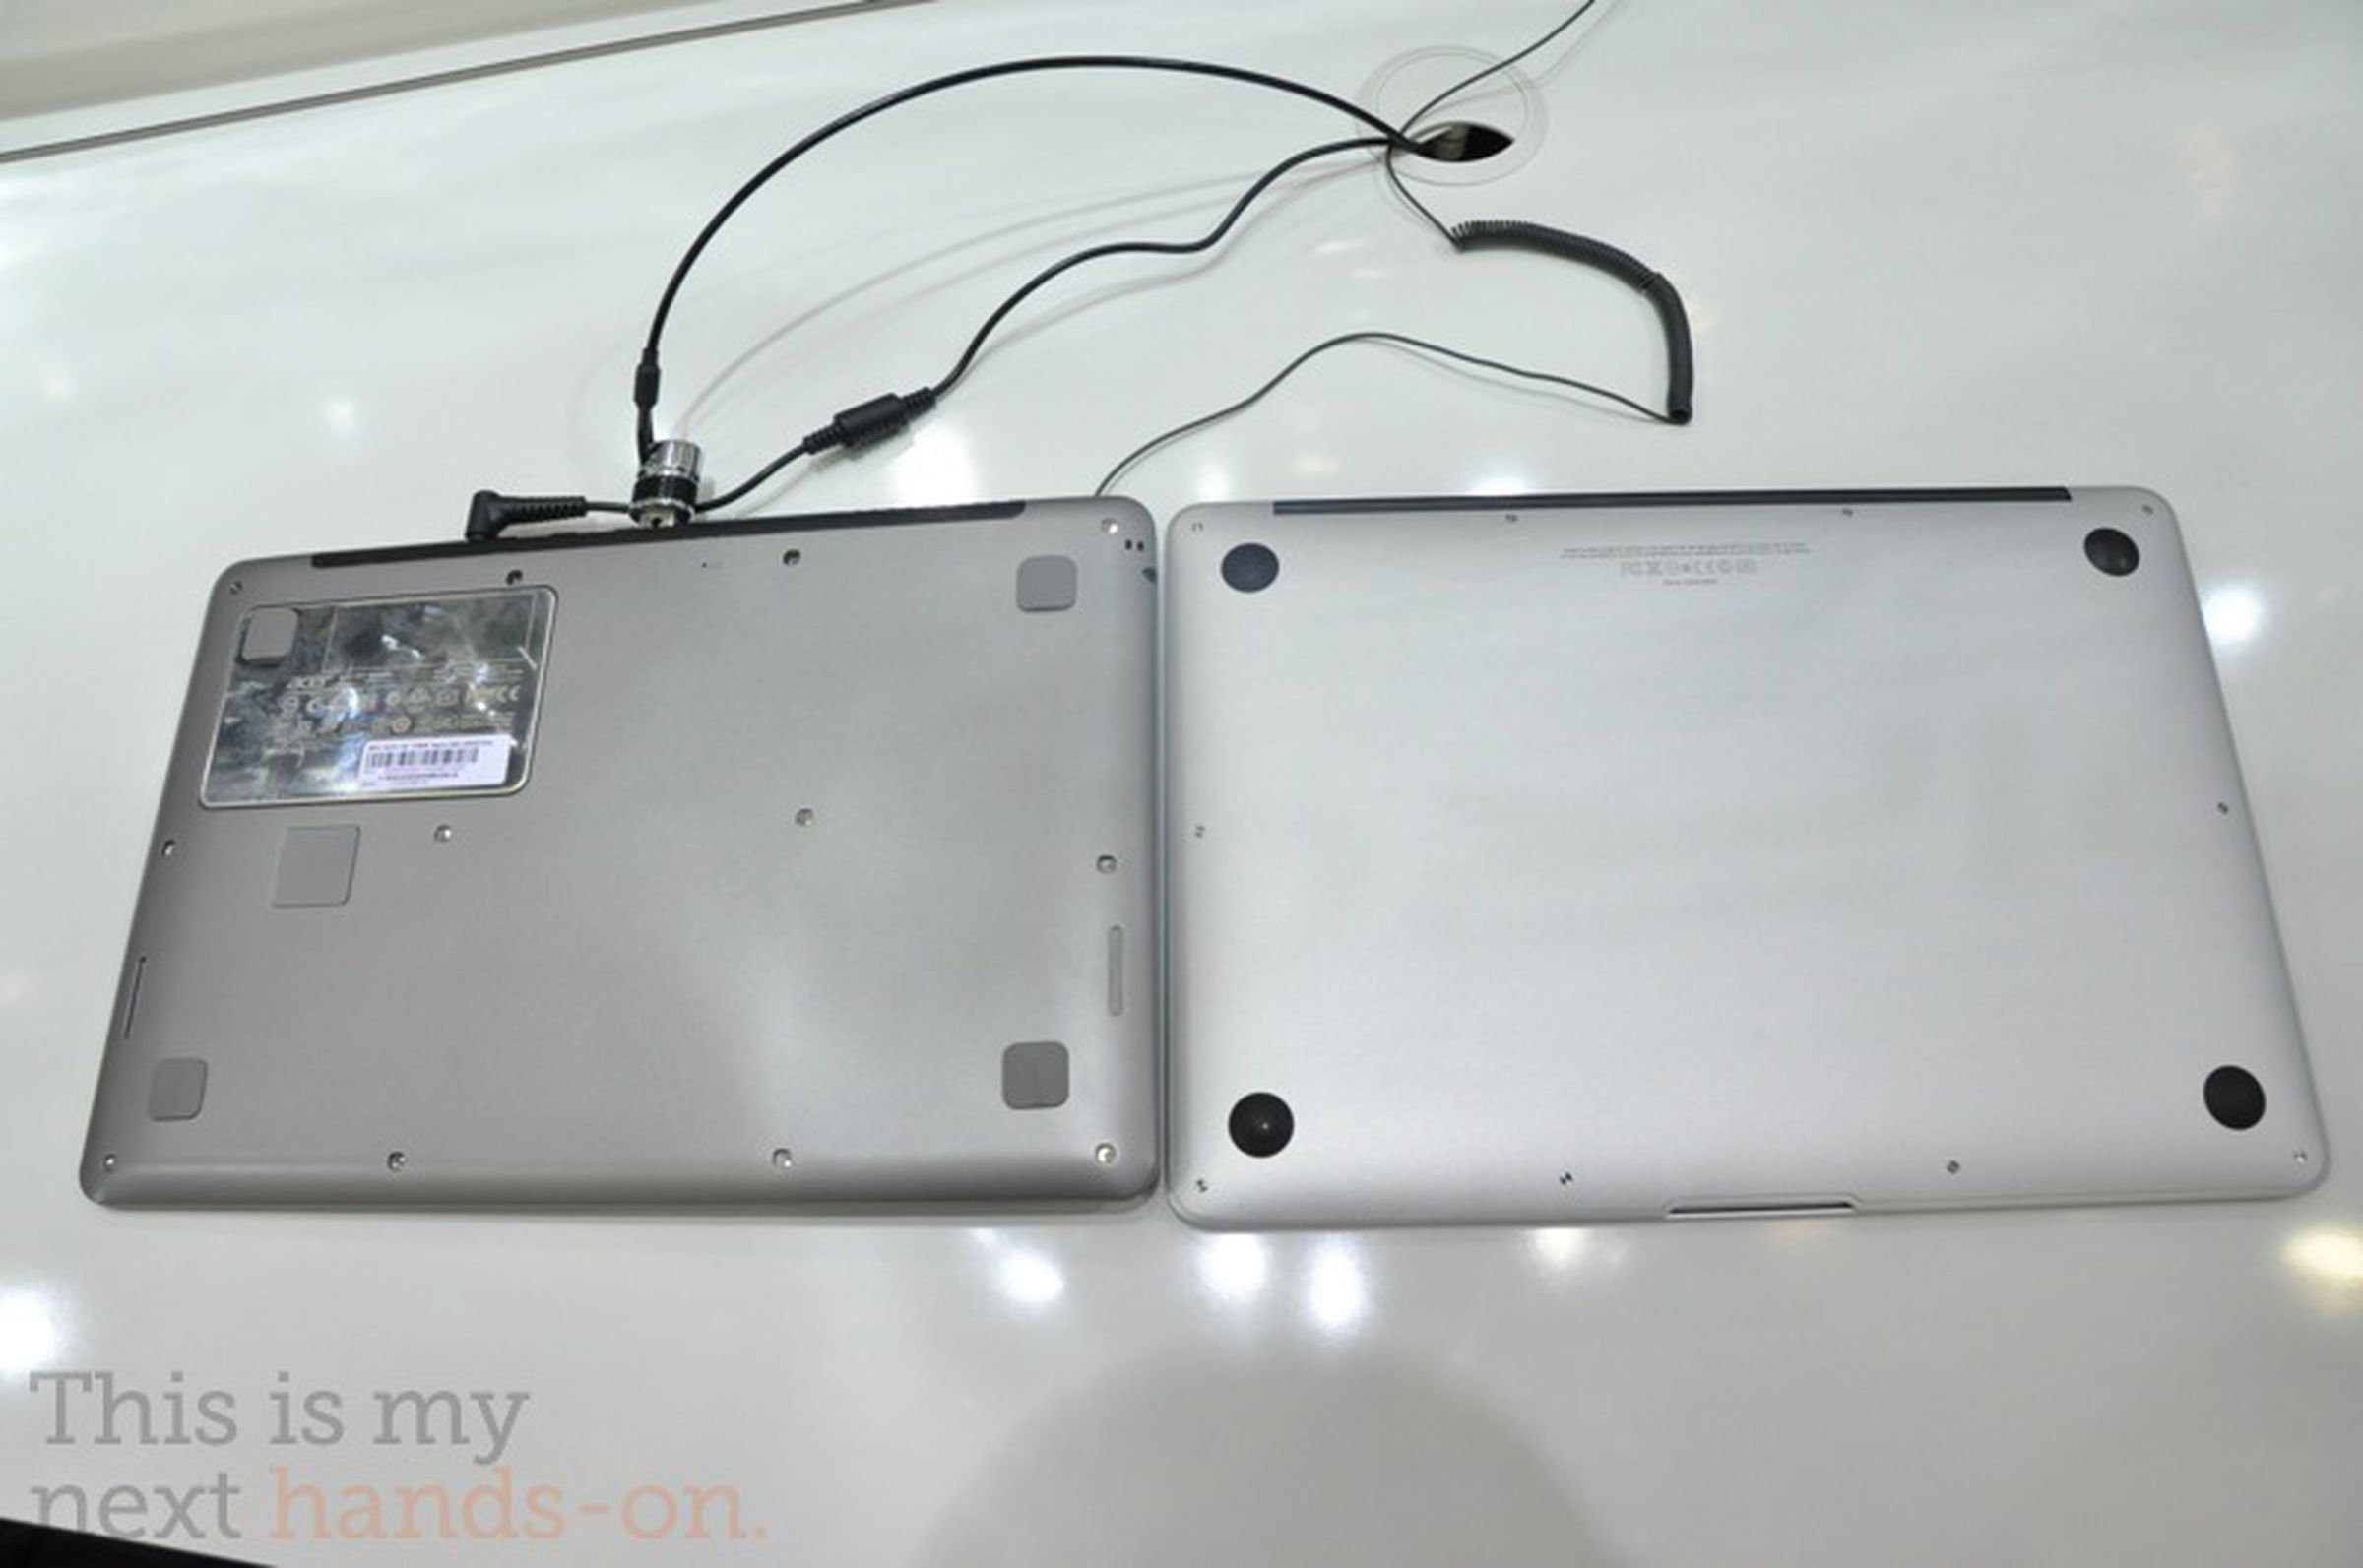 MacBook Air vs Acer Aspire S3 photos